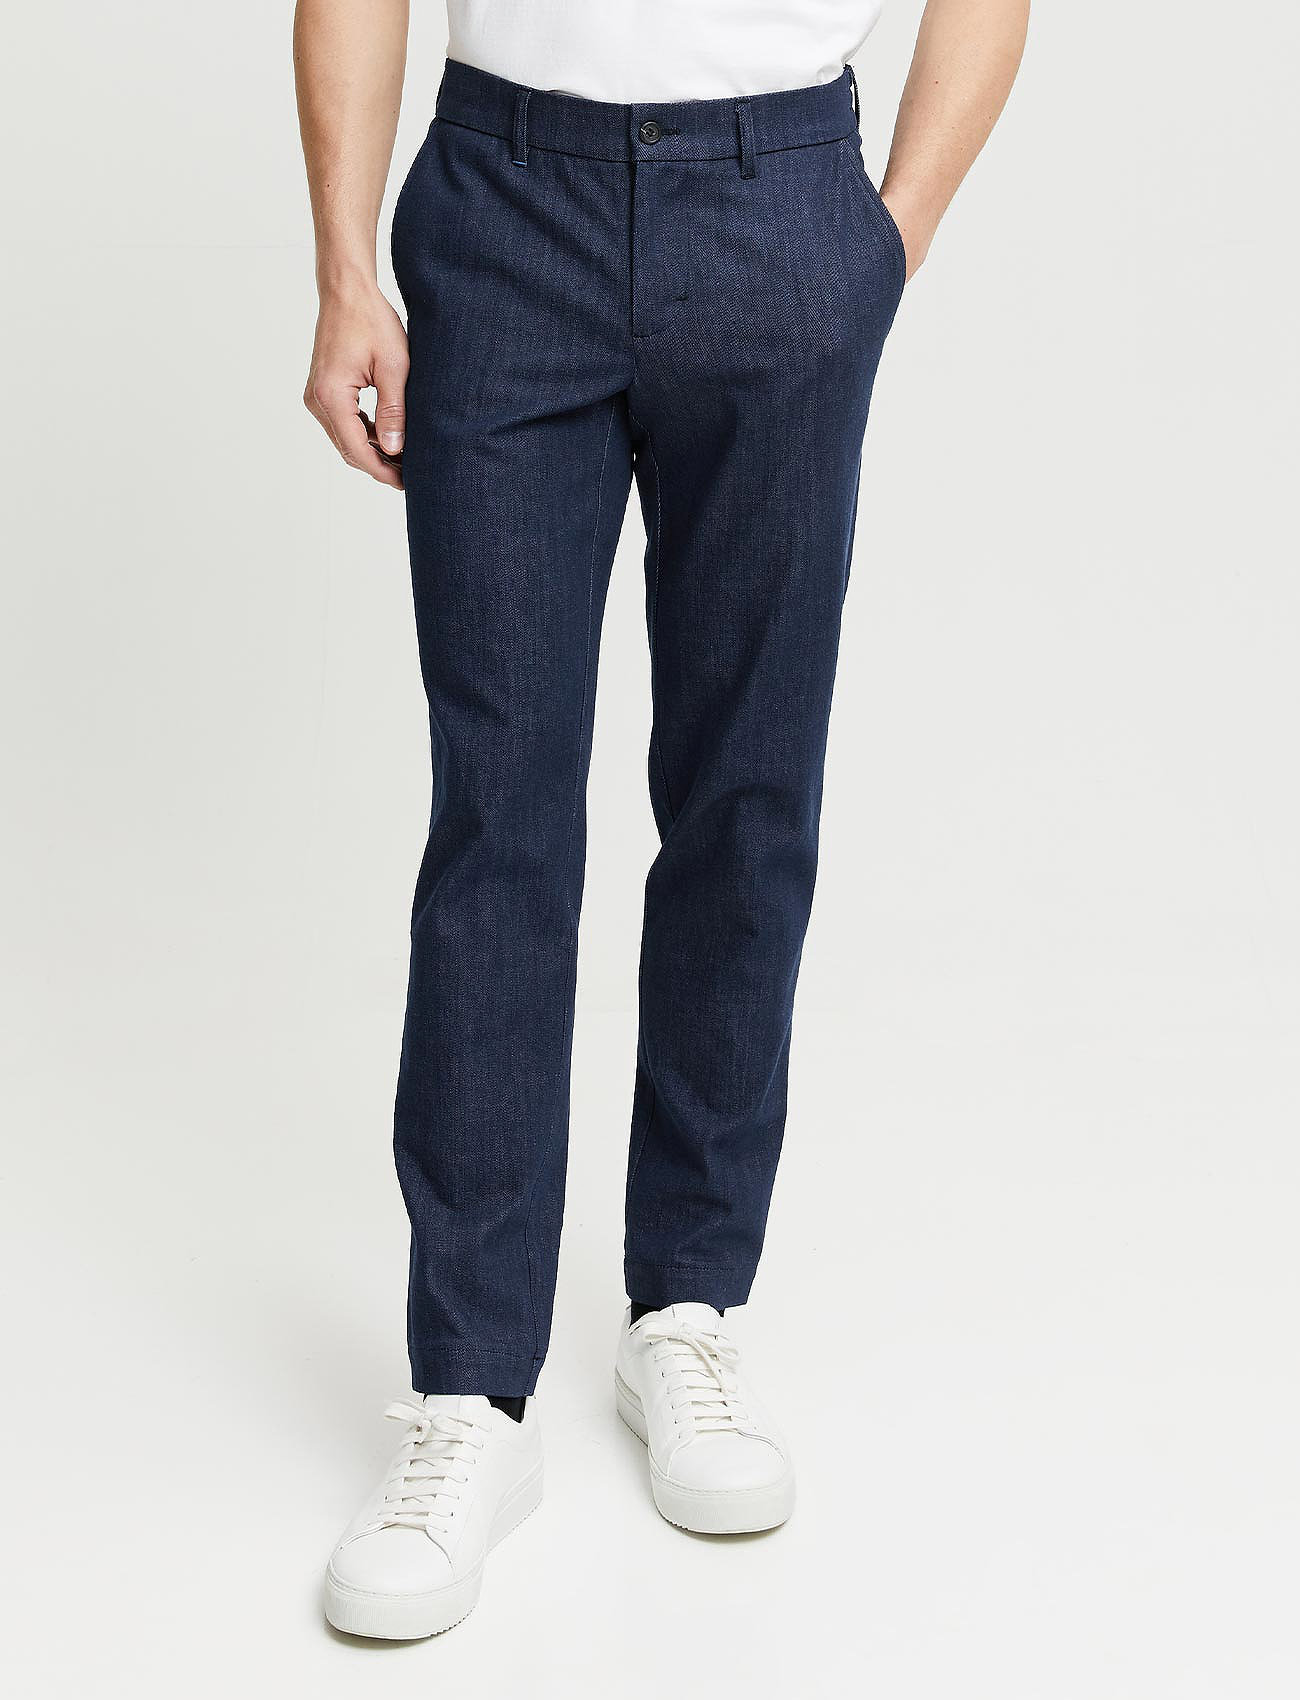 FRENN - Seppo Organic Cotton Denim Trousers - nordic style - indigo - 0